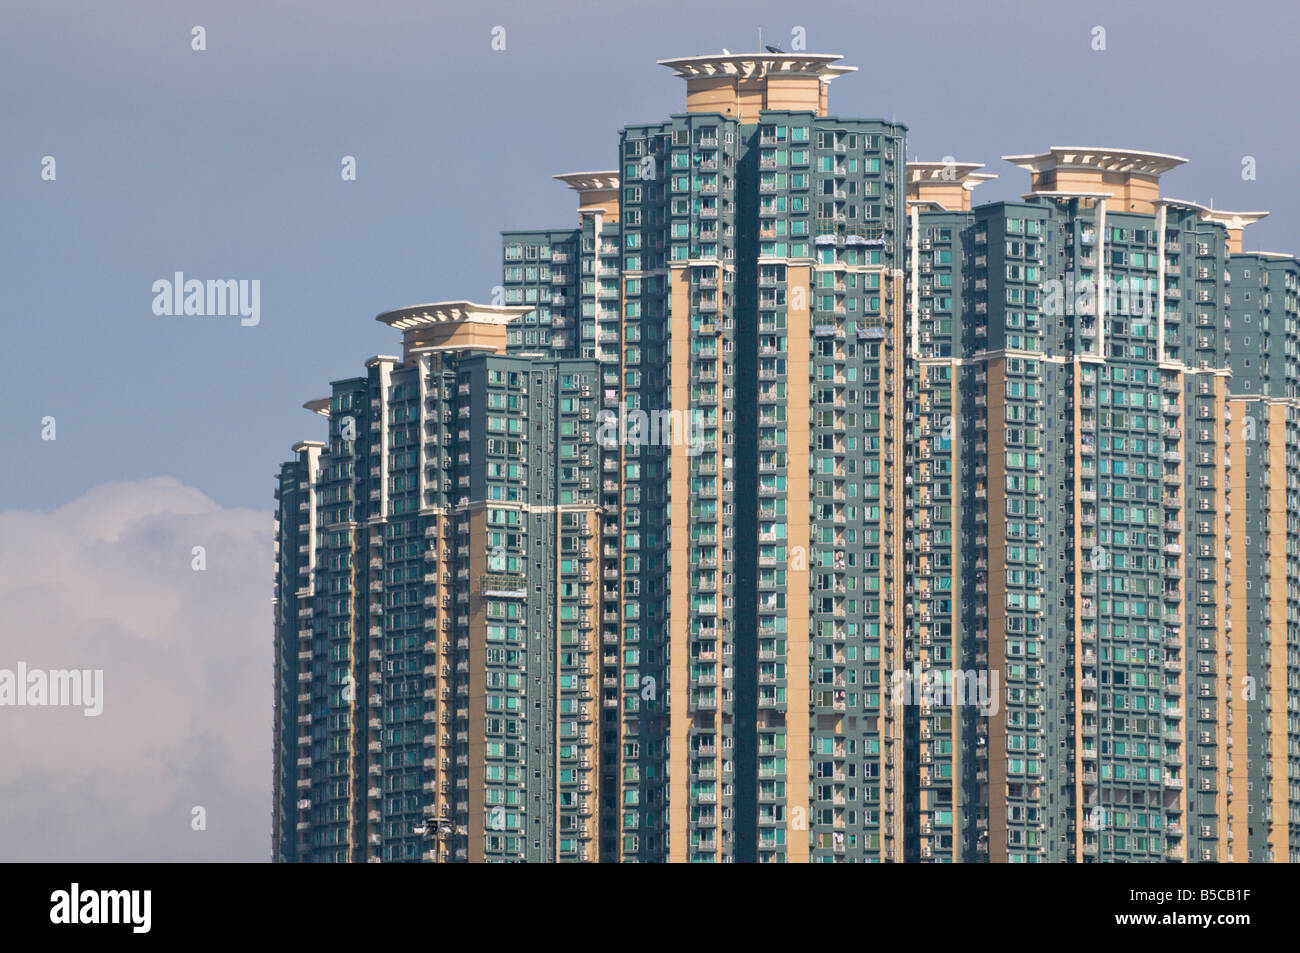 Residential living in Hong Kong Stock Photo